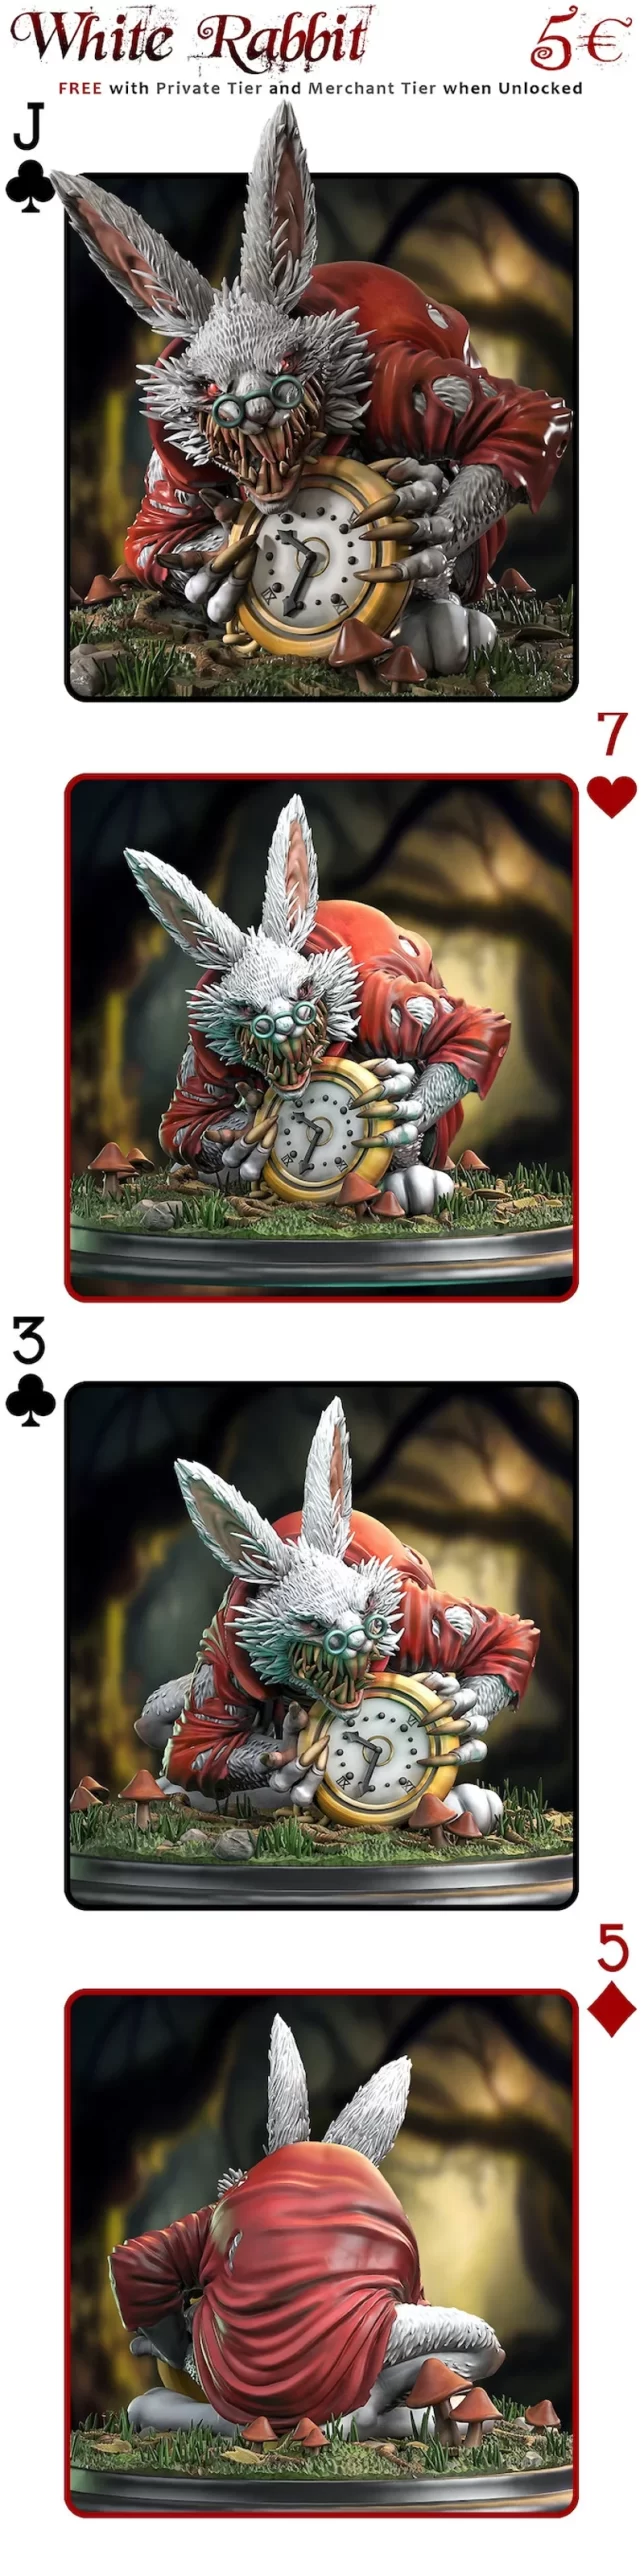 White Rabbit Alice in Creepylandnbsp‣ AssetsFreecom